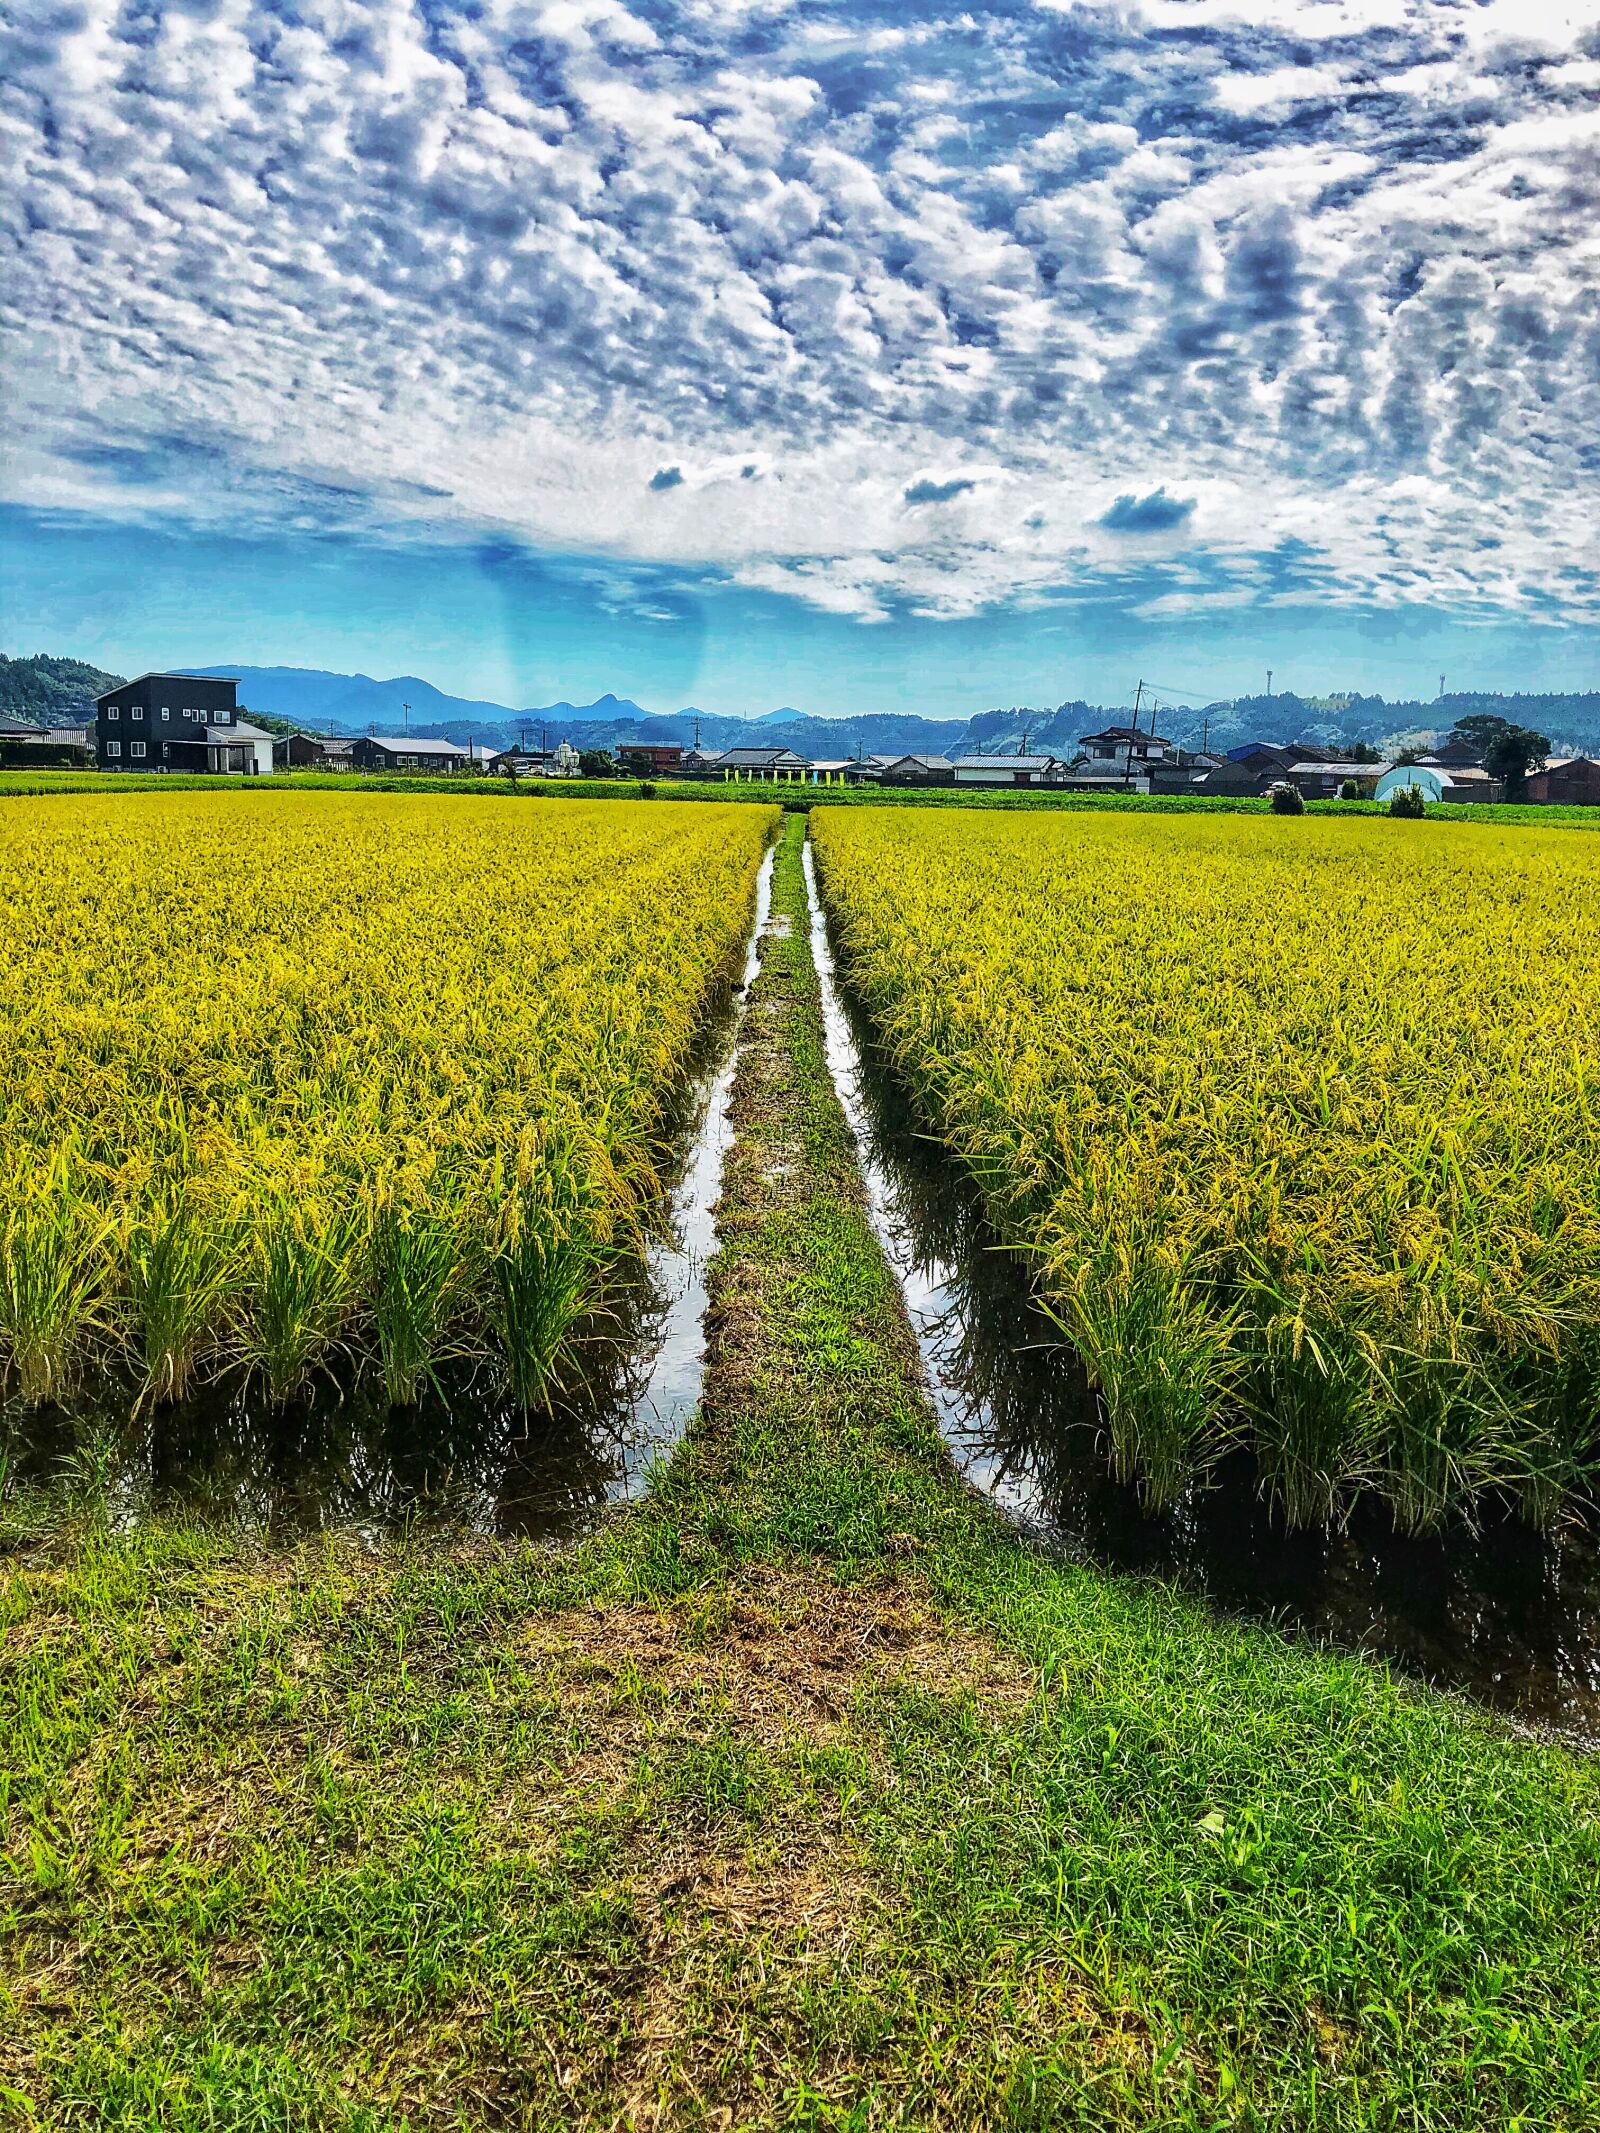 Apple iPhone 8 Plus + iPhone 8 Plus back dual camera 3.99mm f/1.8 sample photo. Rice fields, japan, landscape photography